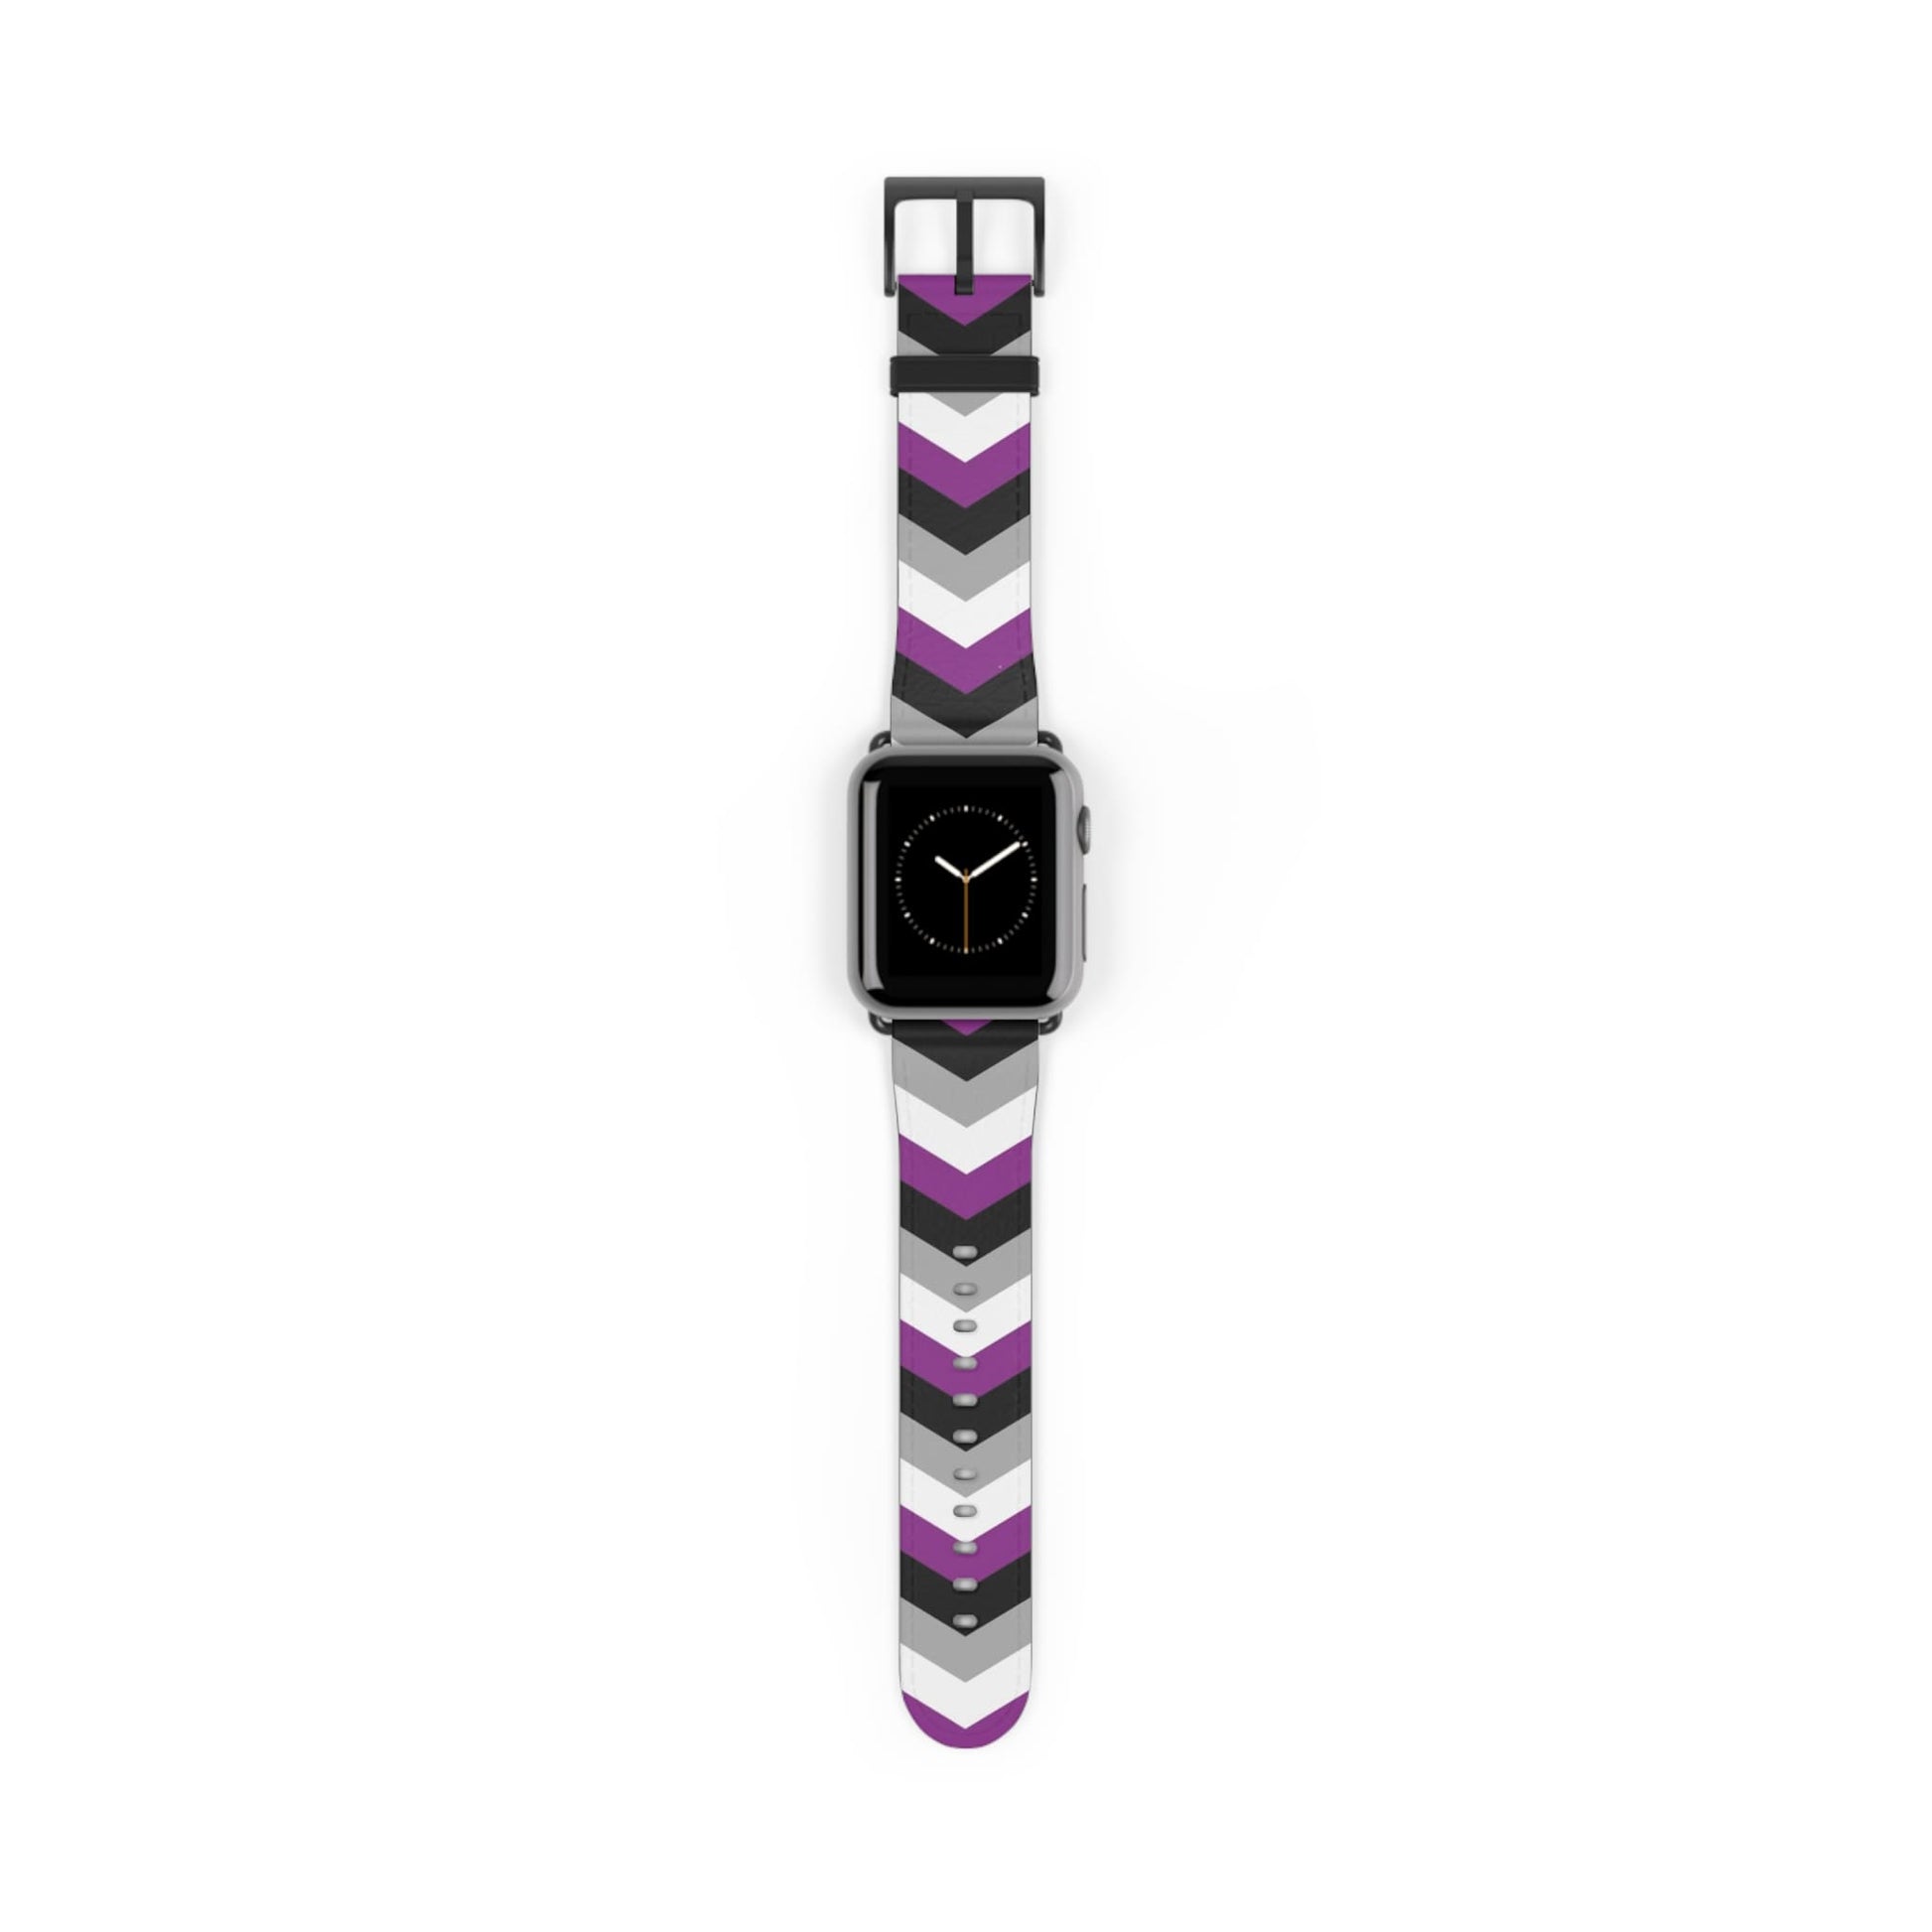 asexual apple watch band, discreet chevron pattern, black